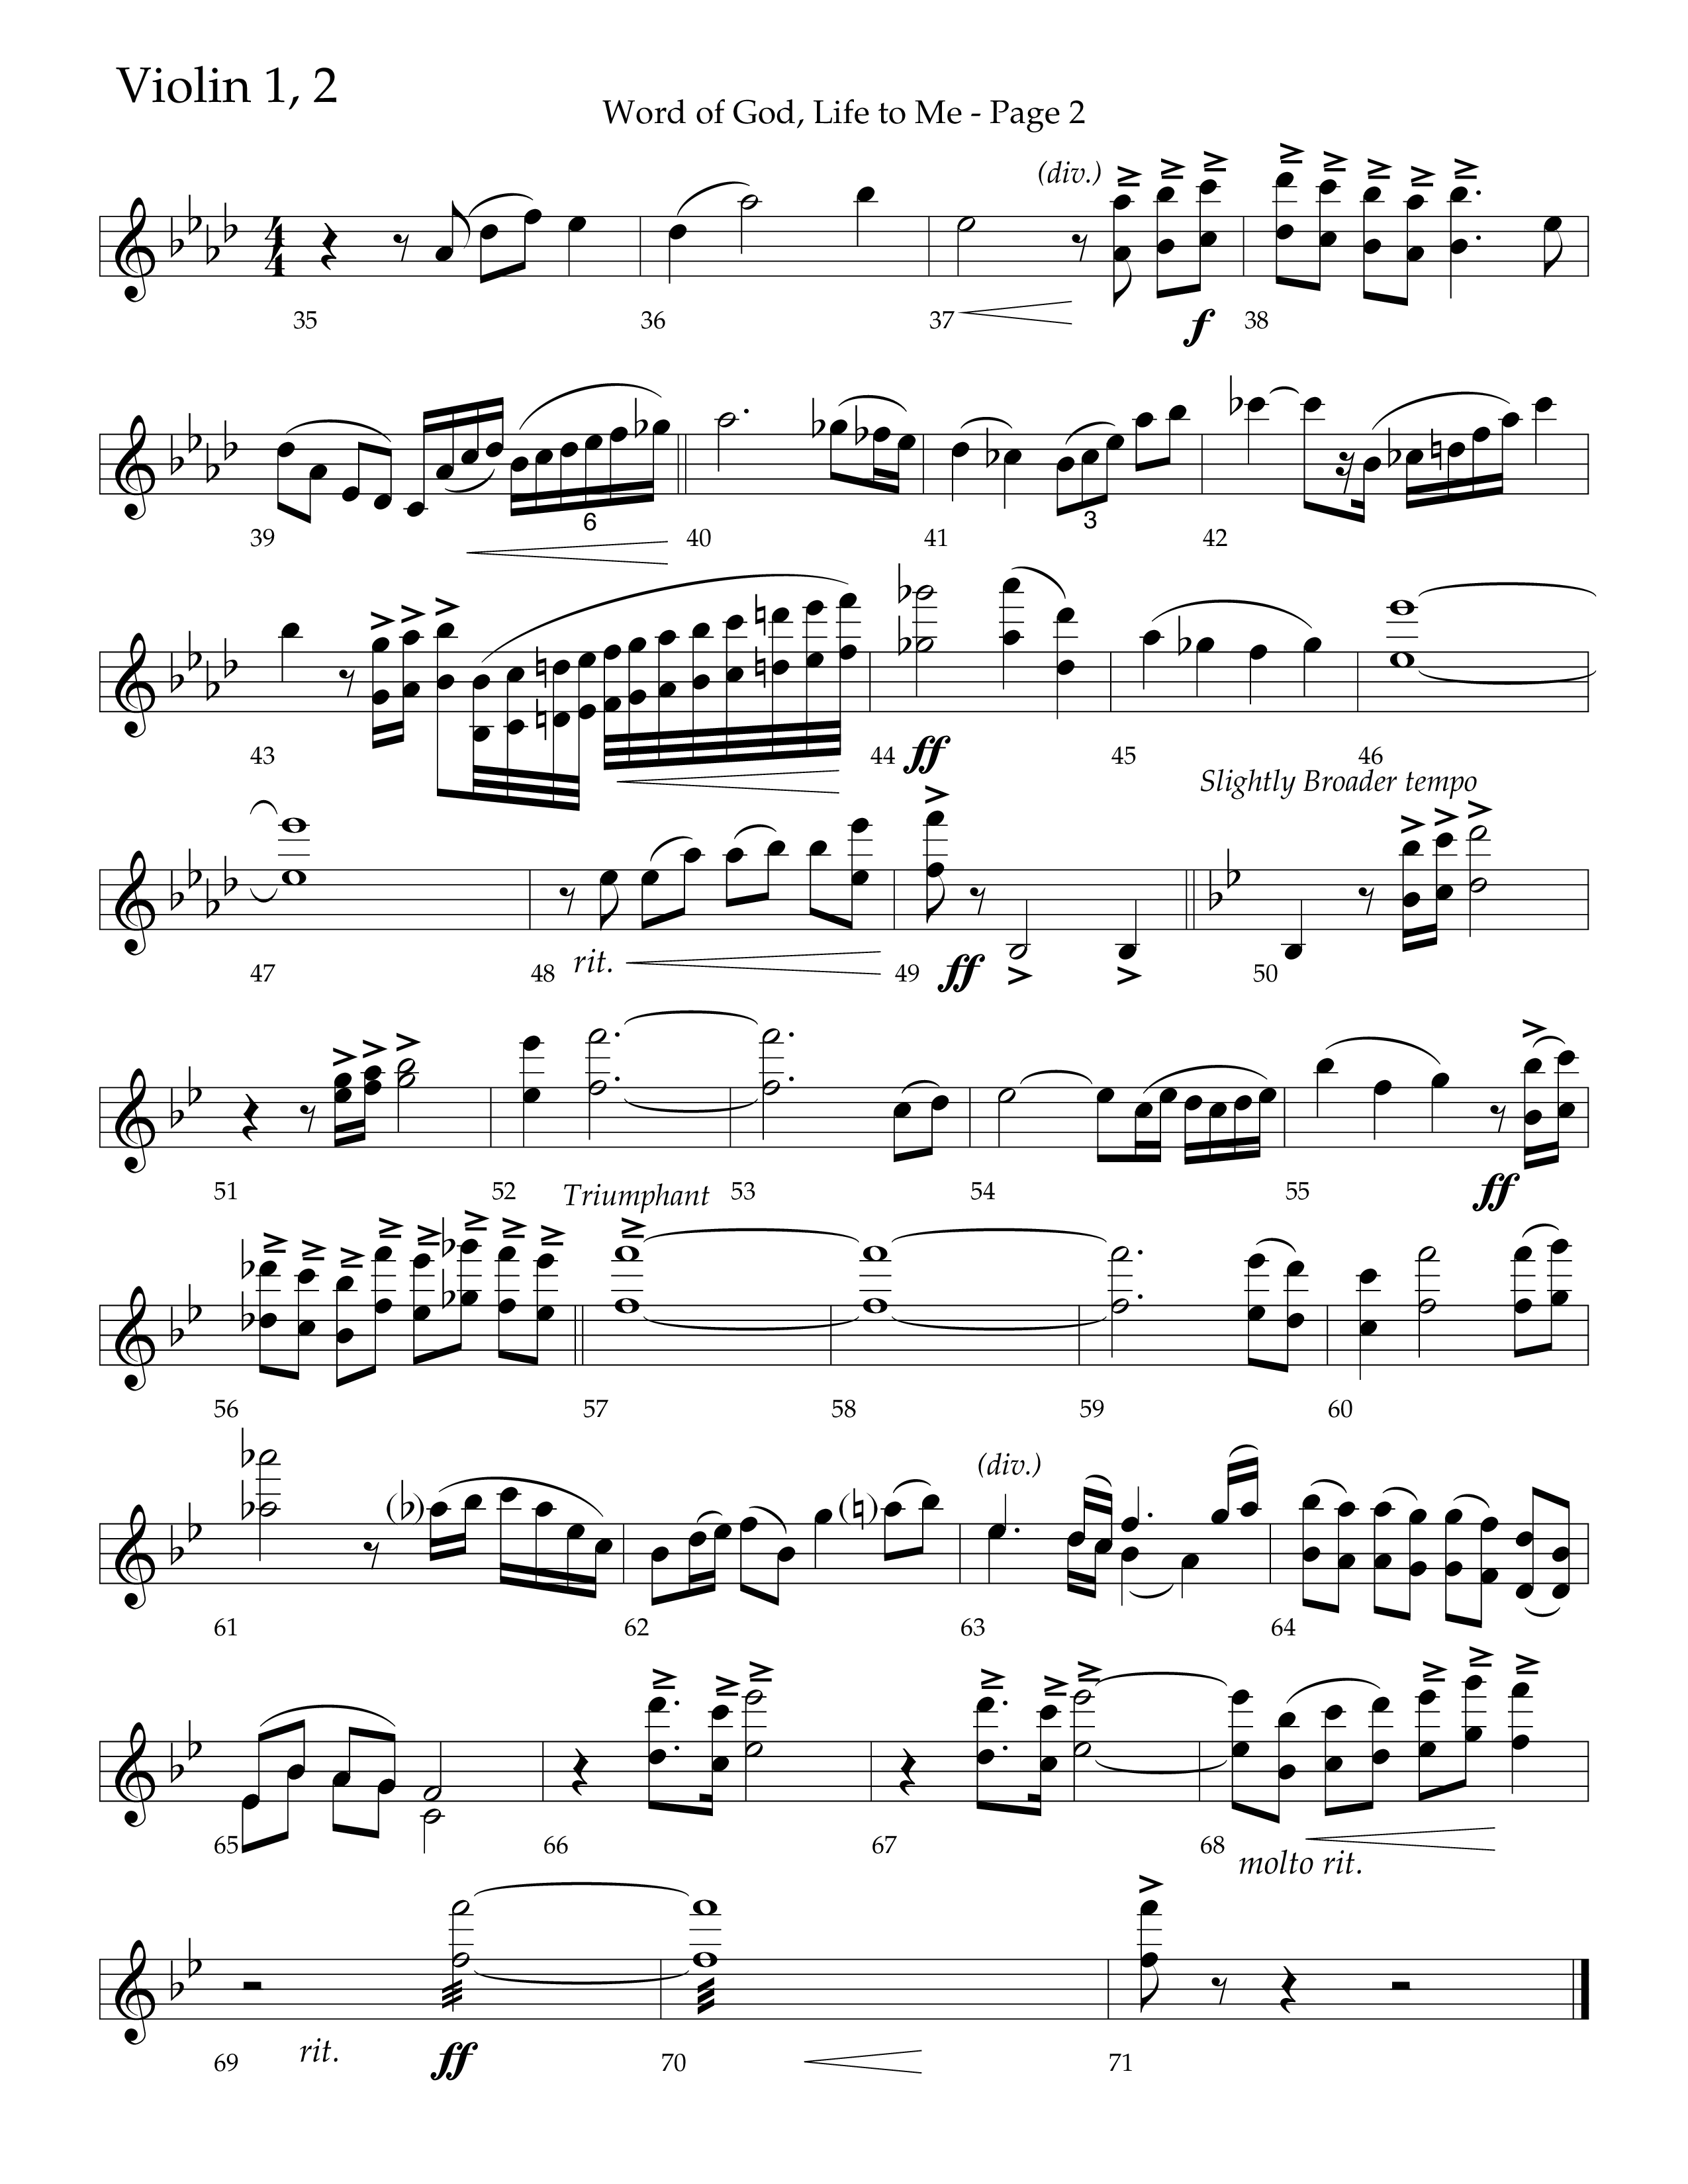 Word Of God Life To Me (Choral Anthem SATB) Violin 1/2 (Lifeway Choral / Arr. David Hamilton)